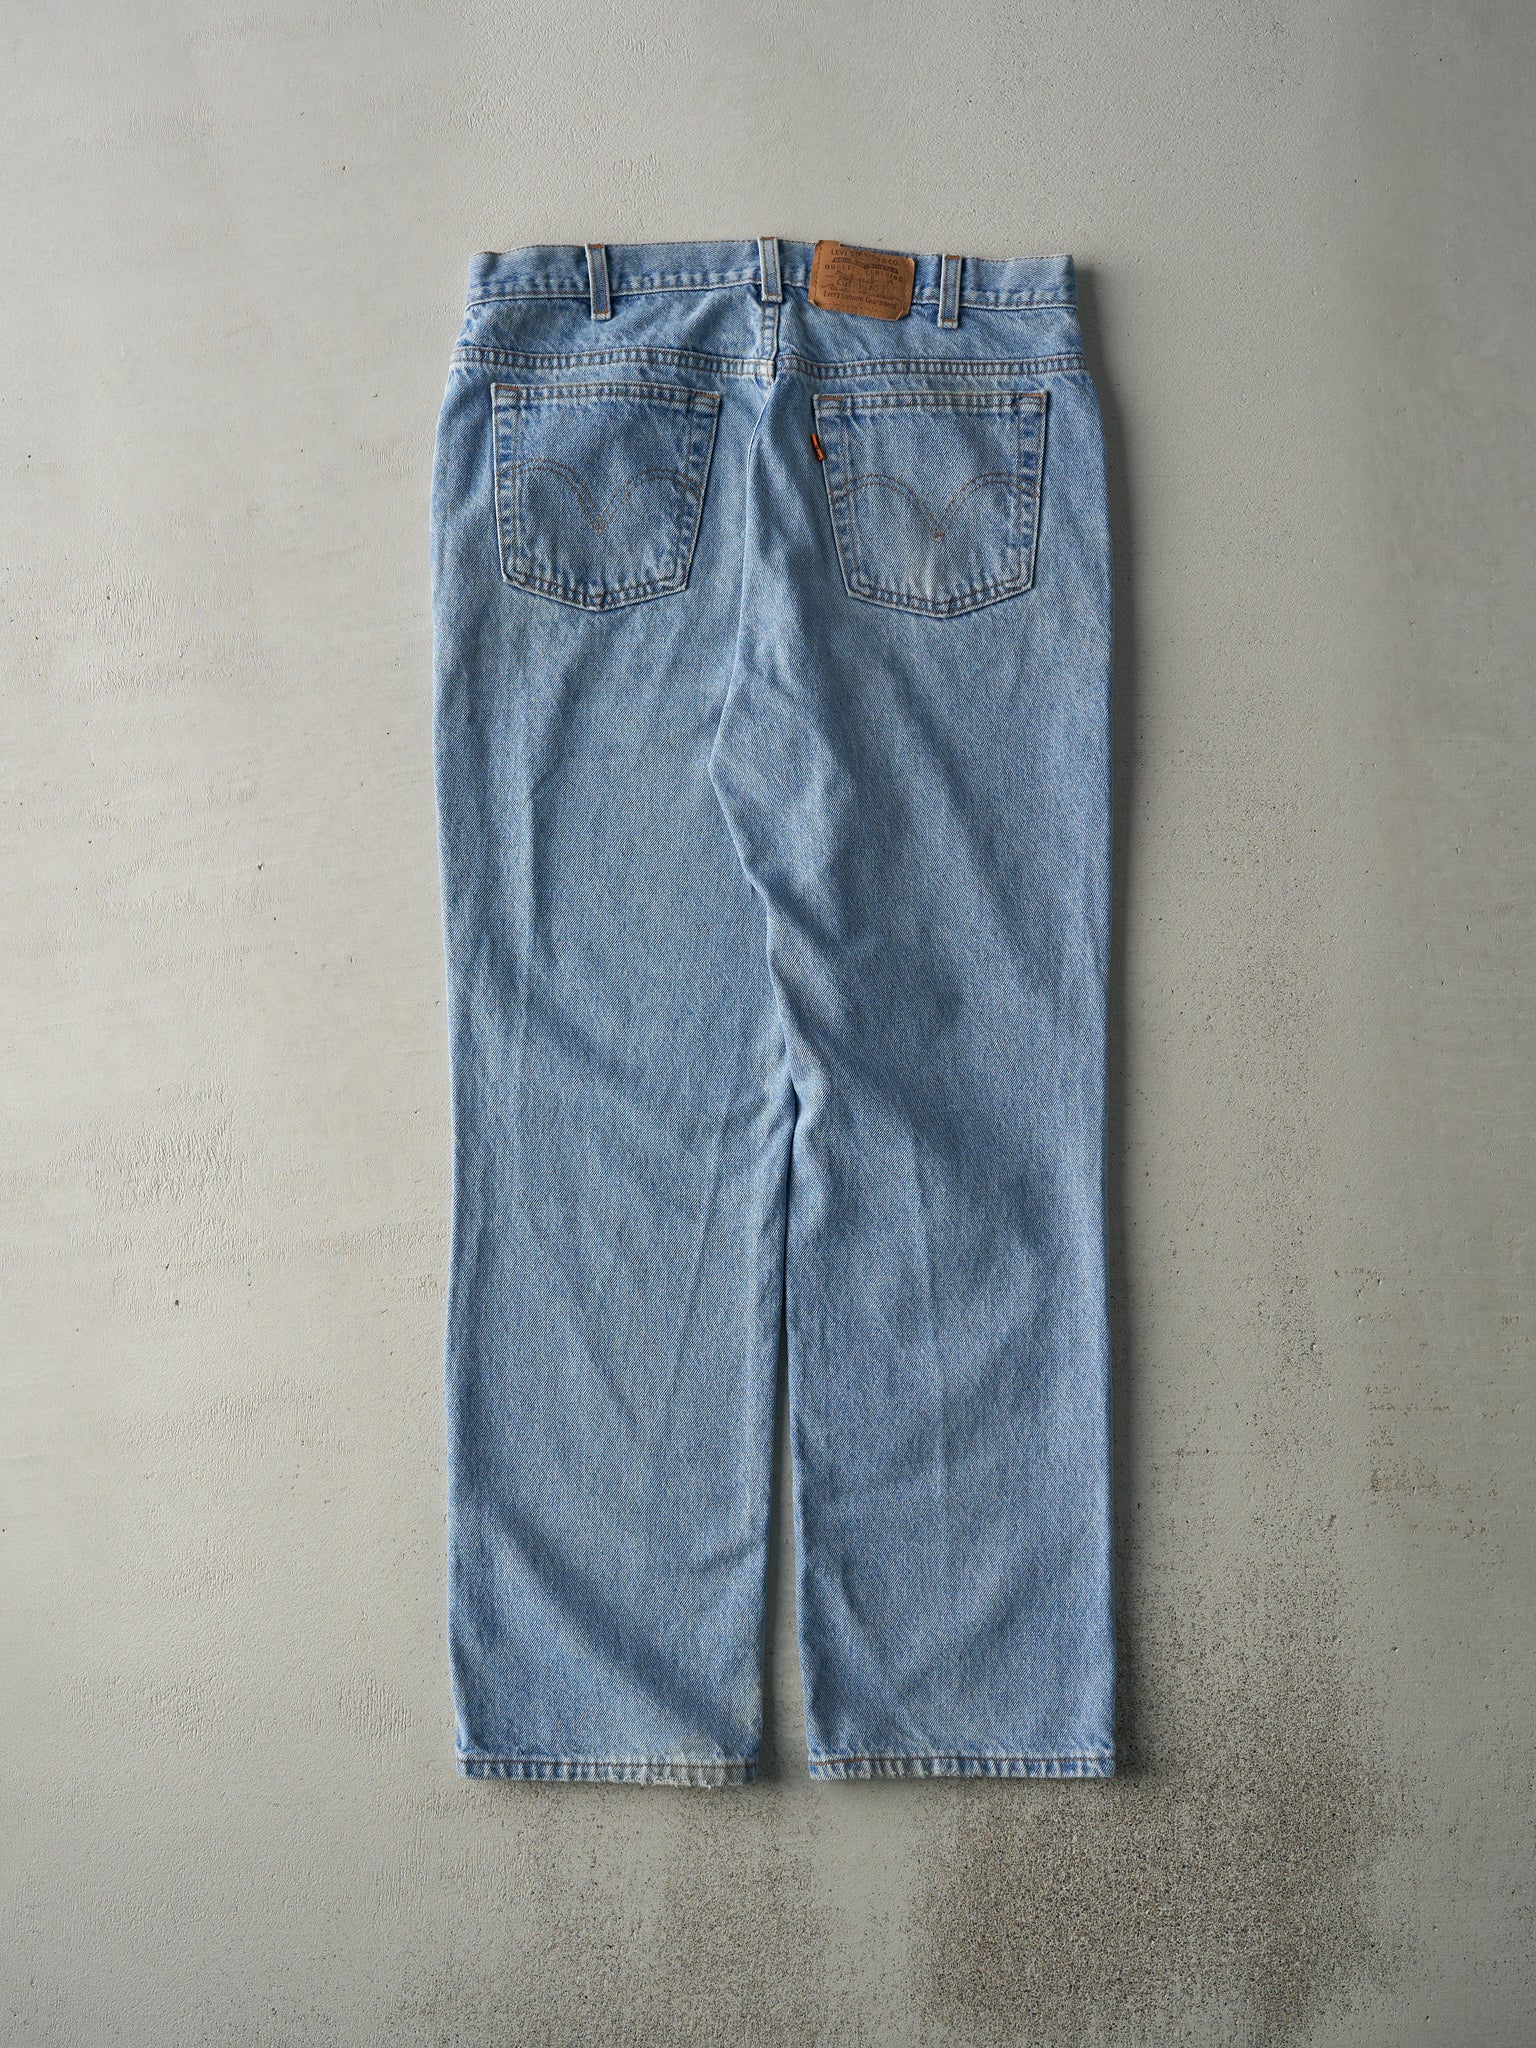 Vintage 80s Light Wash Orange Tab Levi's Jeans (34x29)